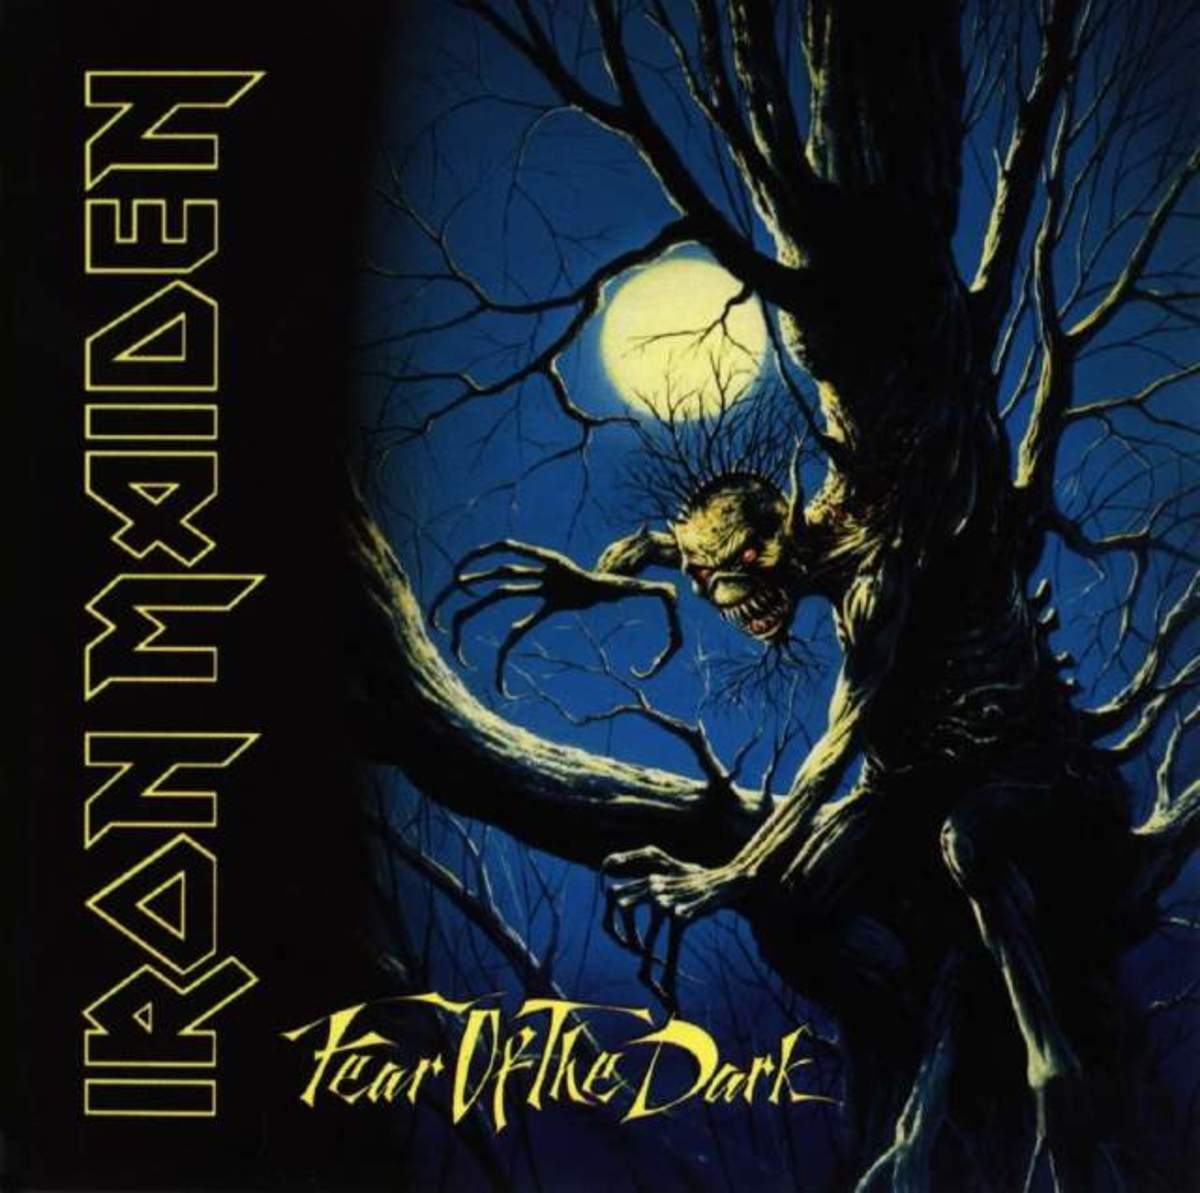 Fear of the Dark (Iron Maiden album) - Wikipedia